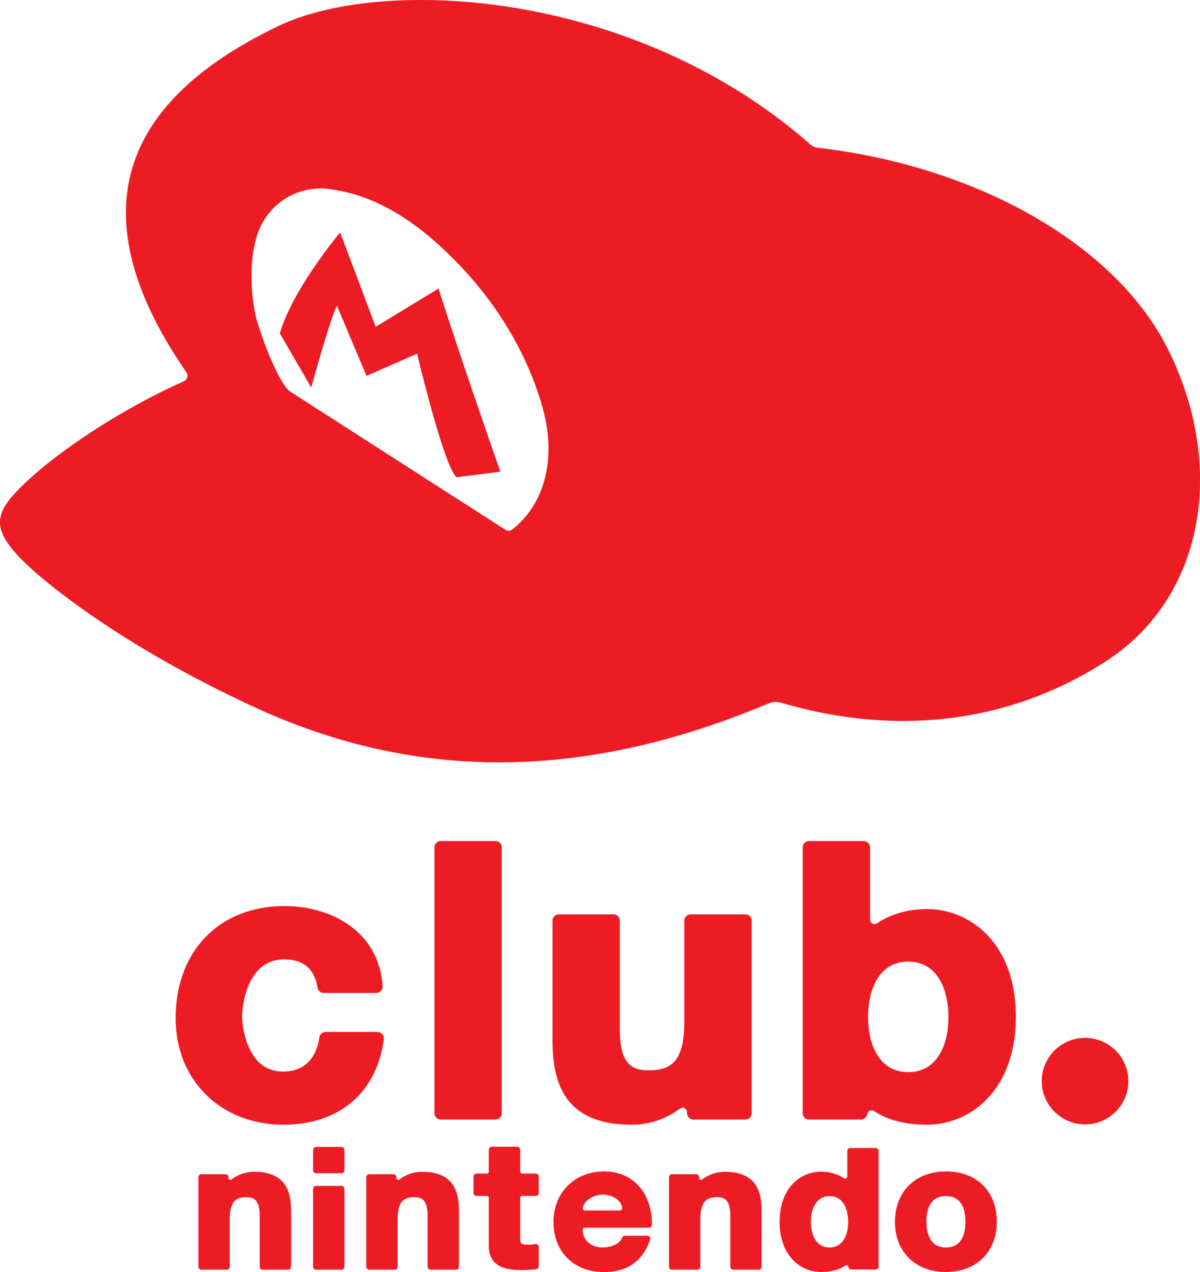 Nintendo логотип. Nintendo logo. Nintendo logo 1024x1024. Nintendo logo 2400x2400.